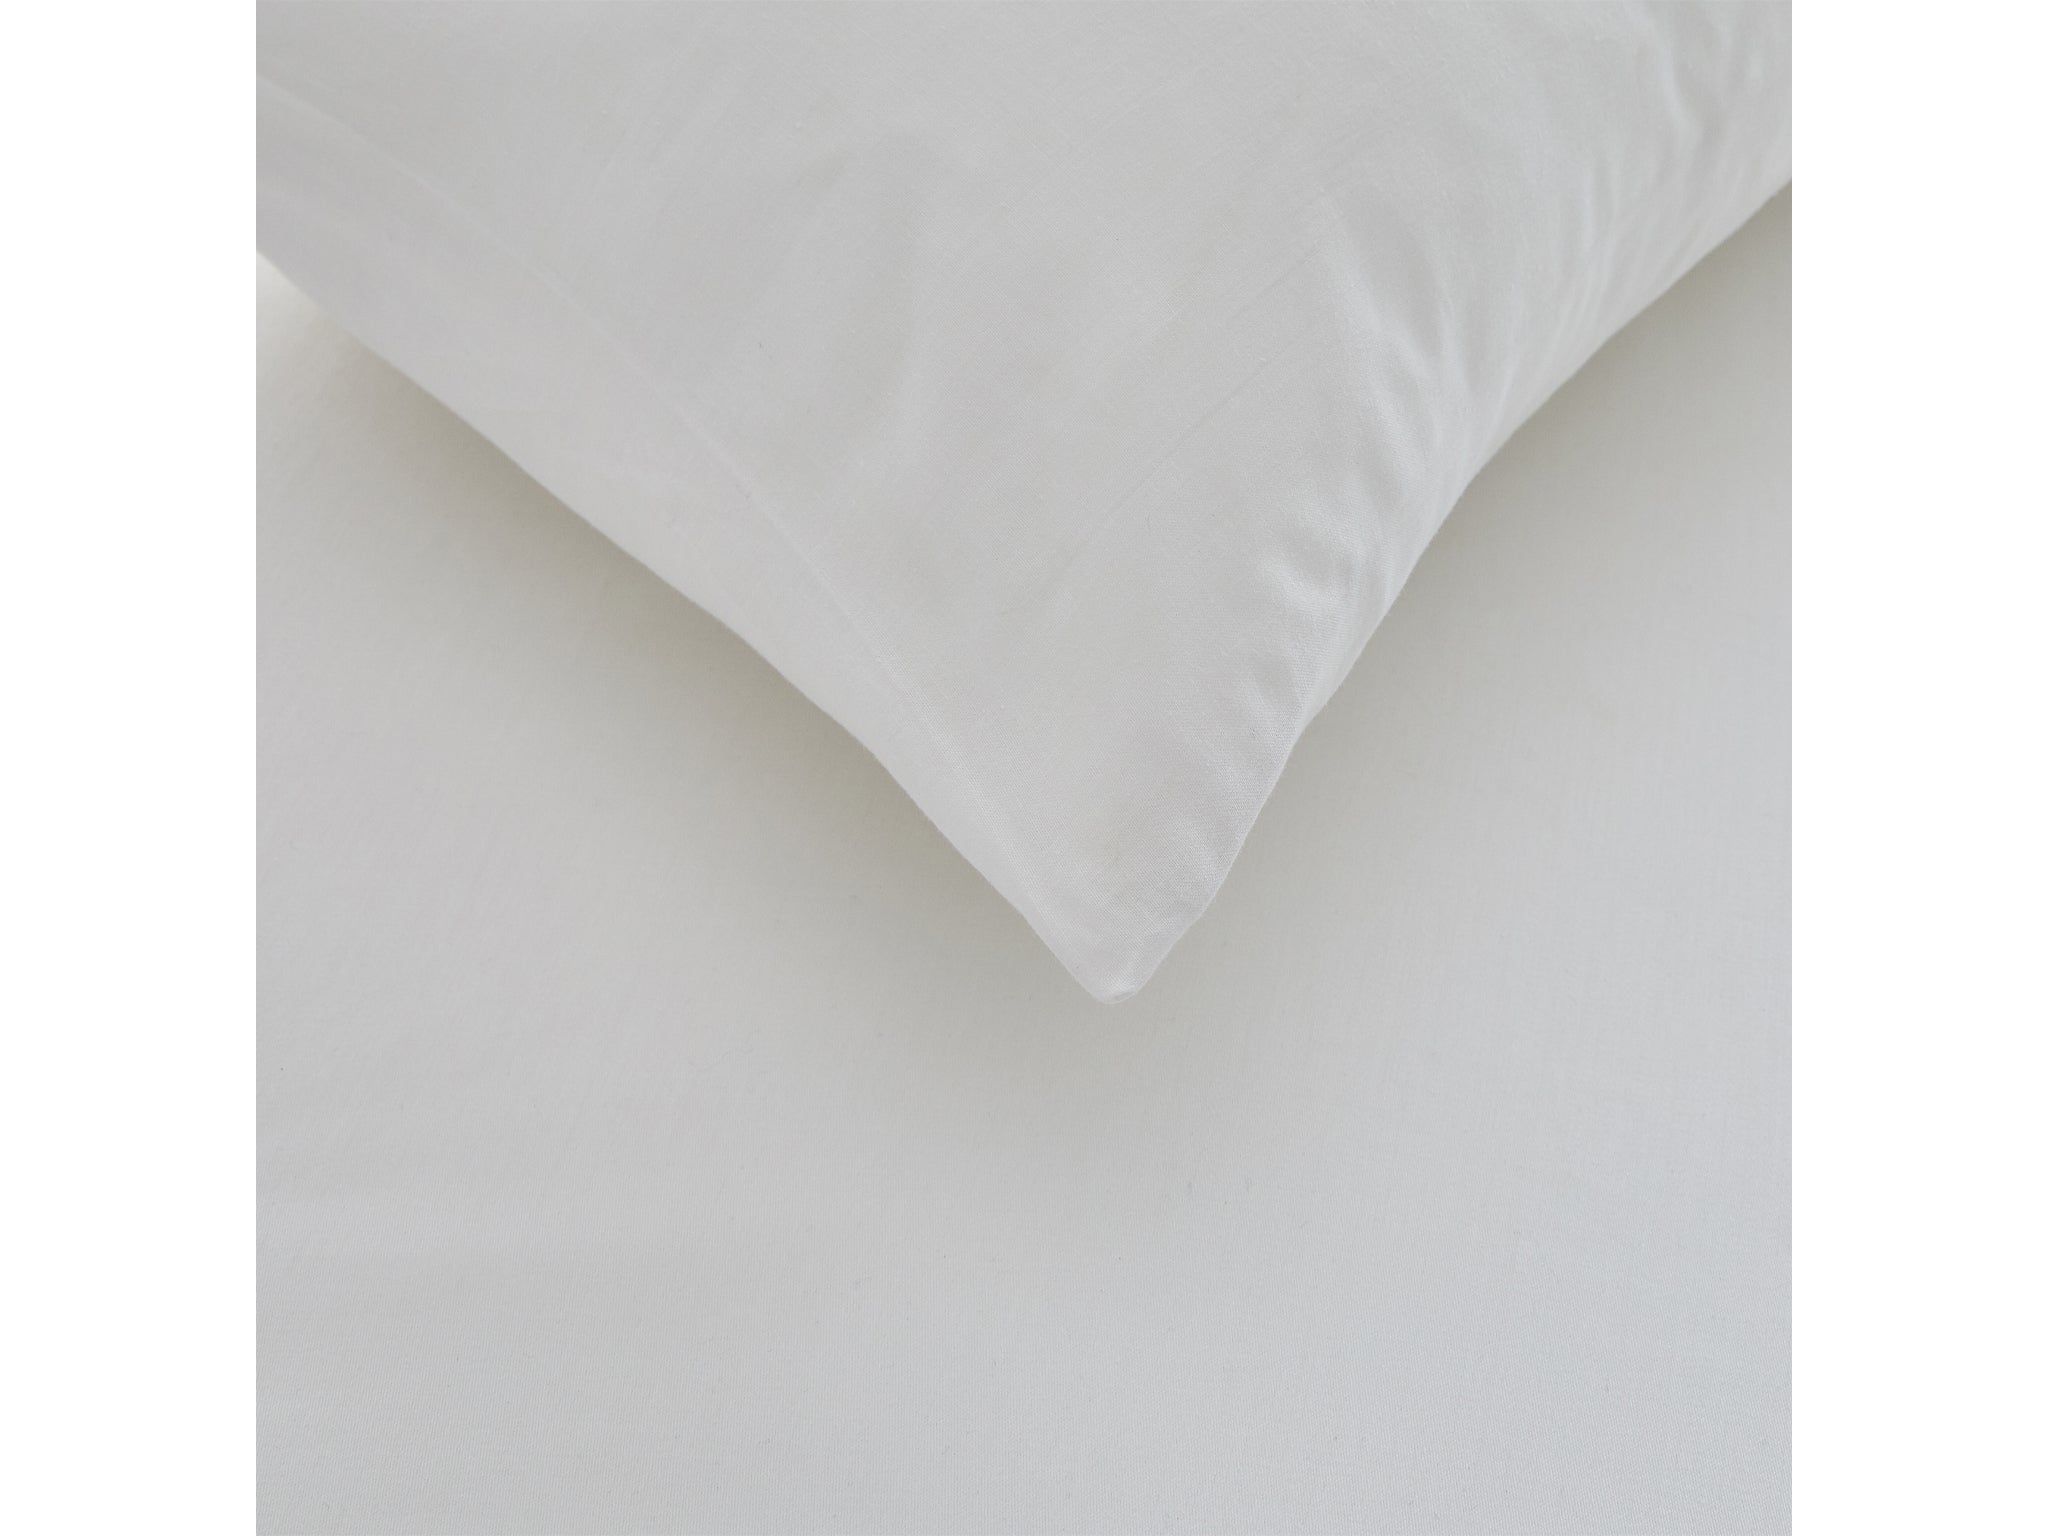 Luxury 19" x 29" Hollowfibre Pillows Polypropylene Anti-Allergy Cot Bed Pillow 